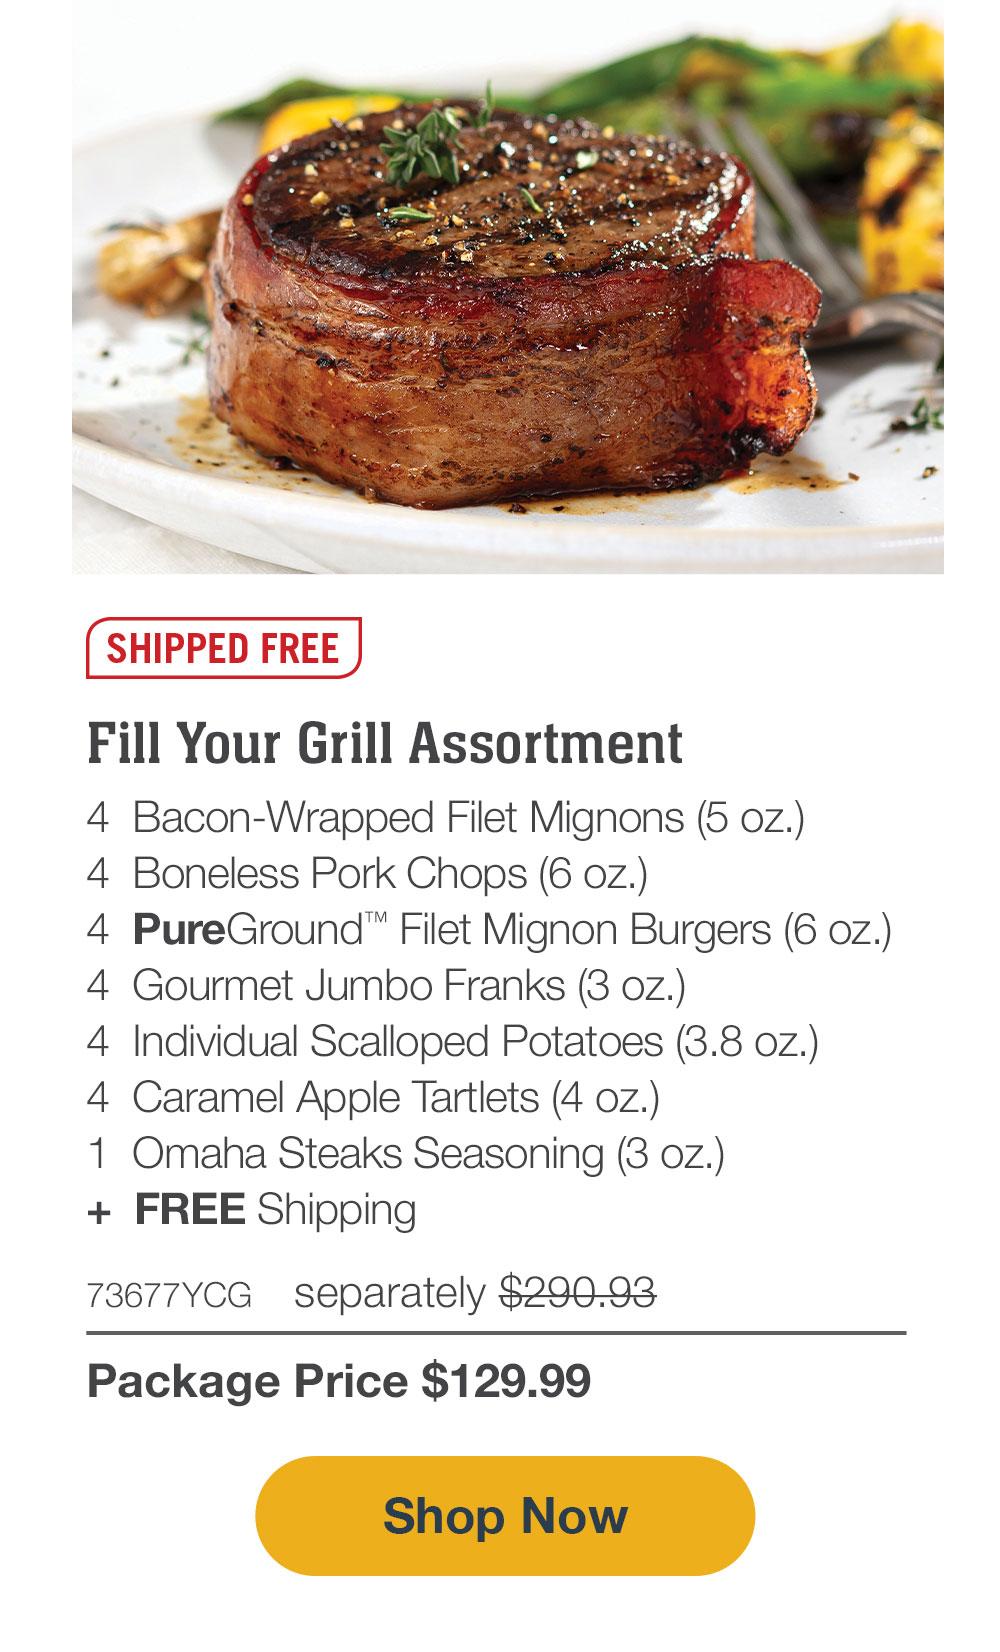 SHIPPED FREE | Grill Master's Delight - 4  Butcher's Cut Top Sirloins (6 oz.) - 4  Bacon-Wrapped Pork Chops (6 oz.) - 4  Omaha Steaks Burgers (6 oz.) - 4  Gourmet Jumbo Franks (3 oz.) - 4  Potatoes au Gratin (2.8 oz.) - 4  Caramel Apple Tartlets (4 oz.) - 1  Omaha Steaks Seasoning (3 oz.) - 73840YCG separately $273.93 | Package Price $129.99 || SHOP NOW